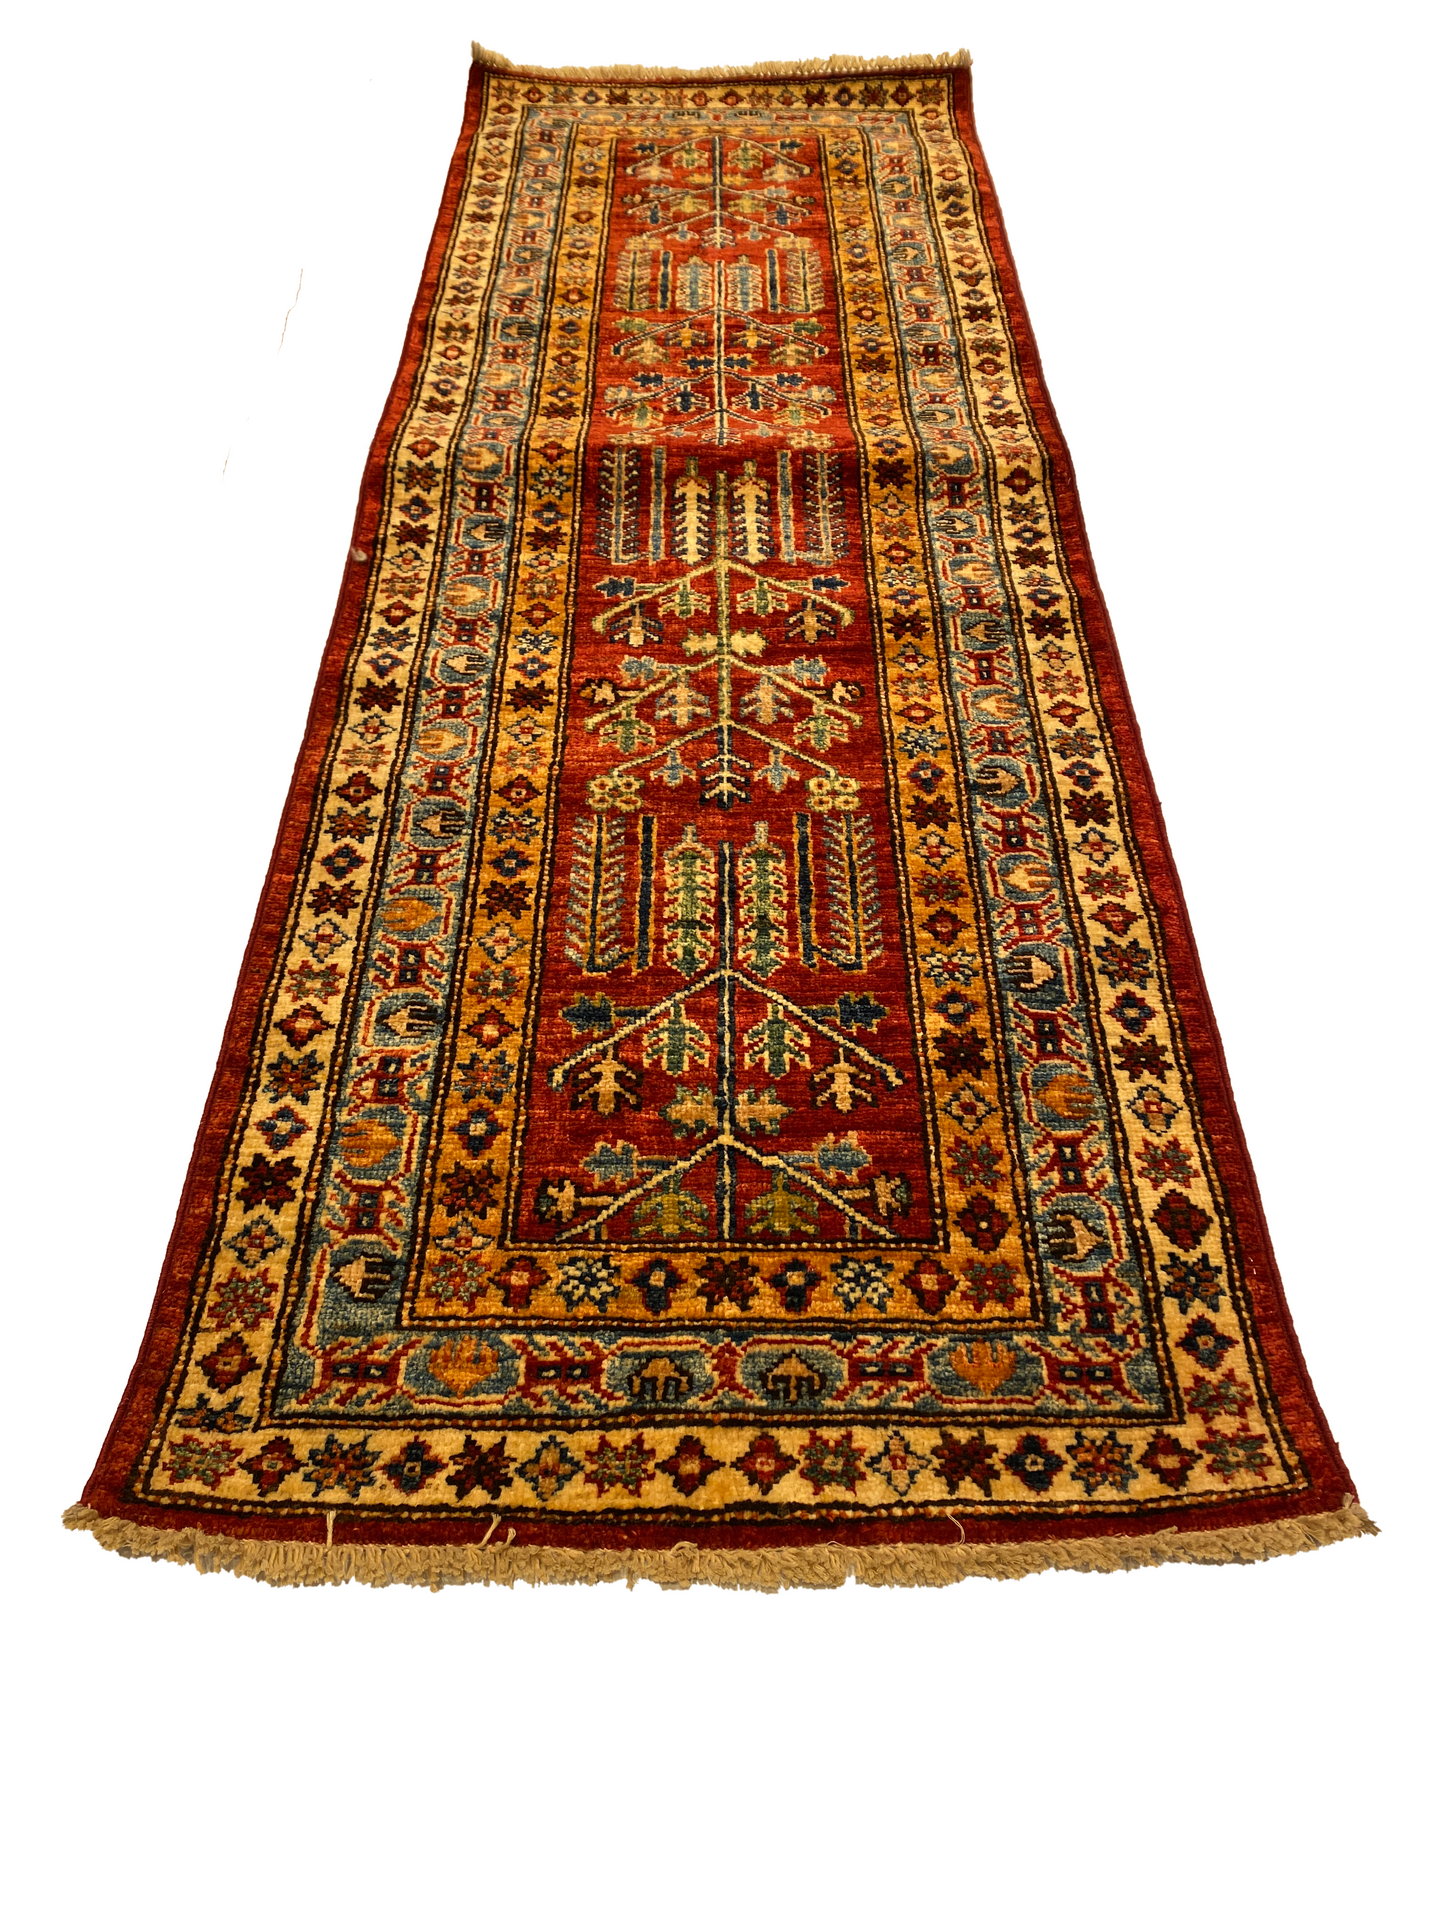 Şirvan Runner Carpet 184 X 62 cm